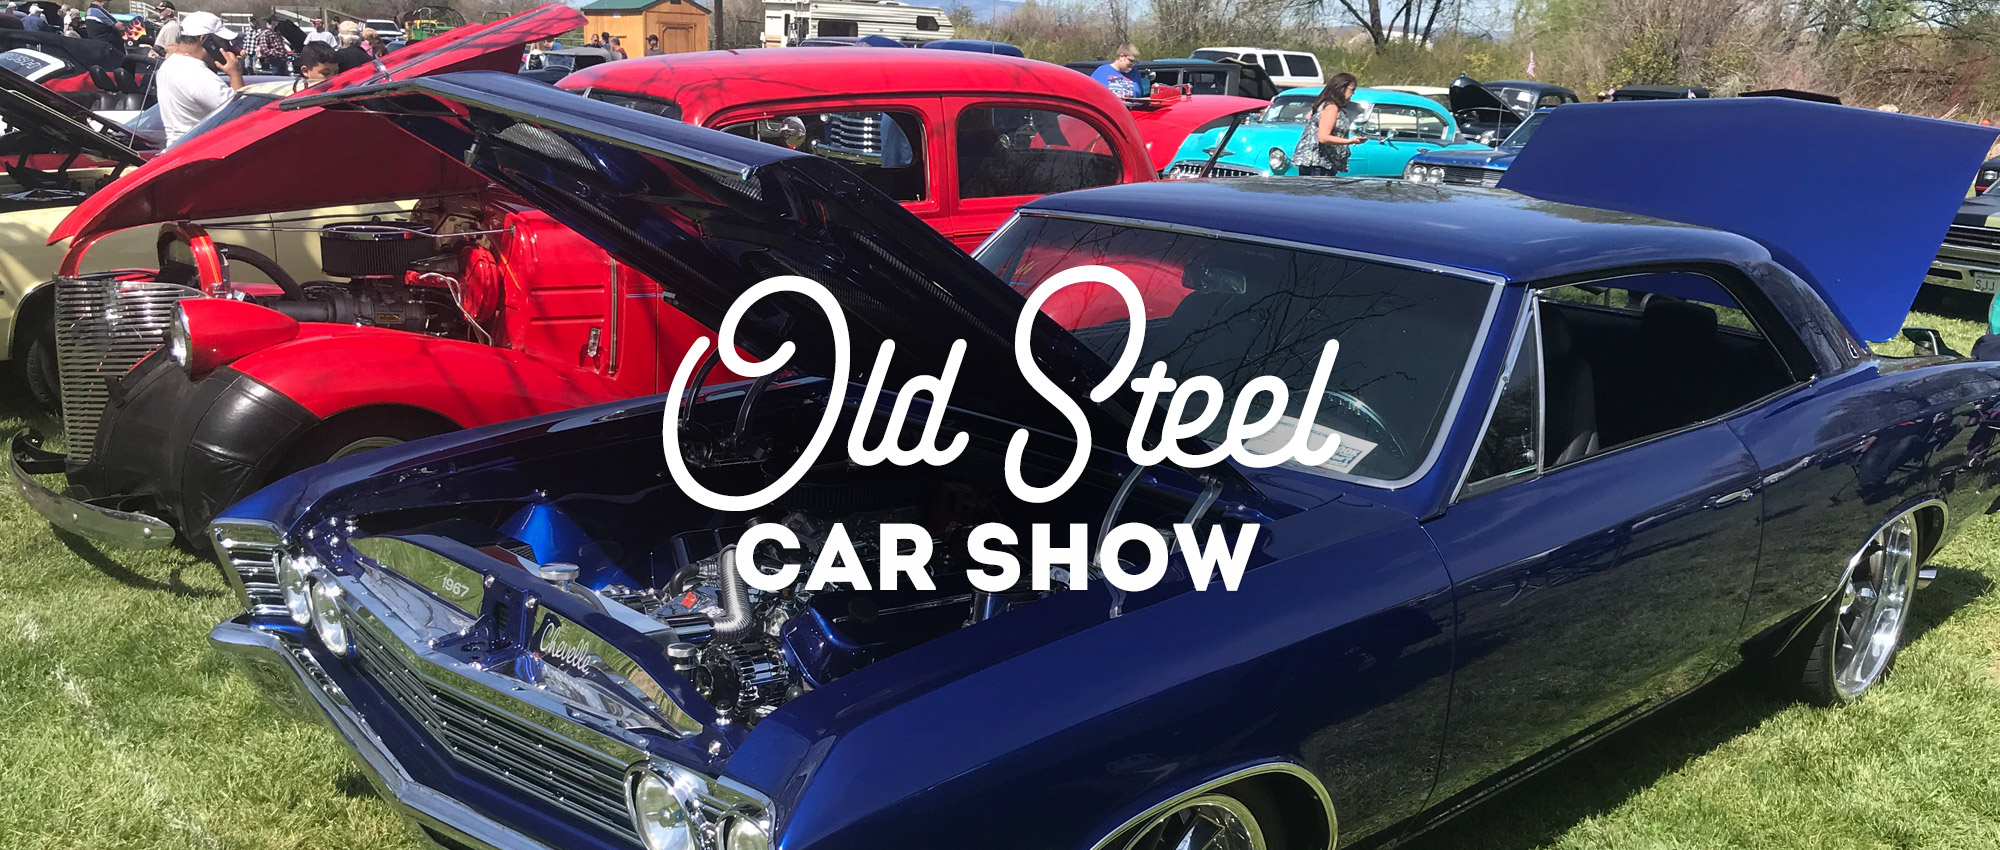 Old Steel Car Show  - Union Gap, WA